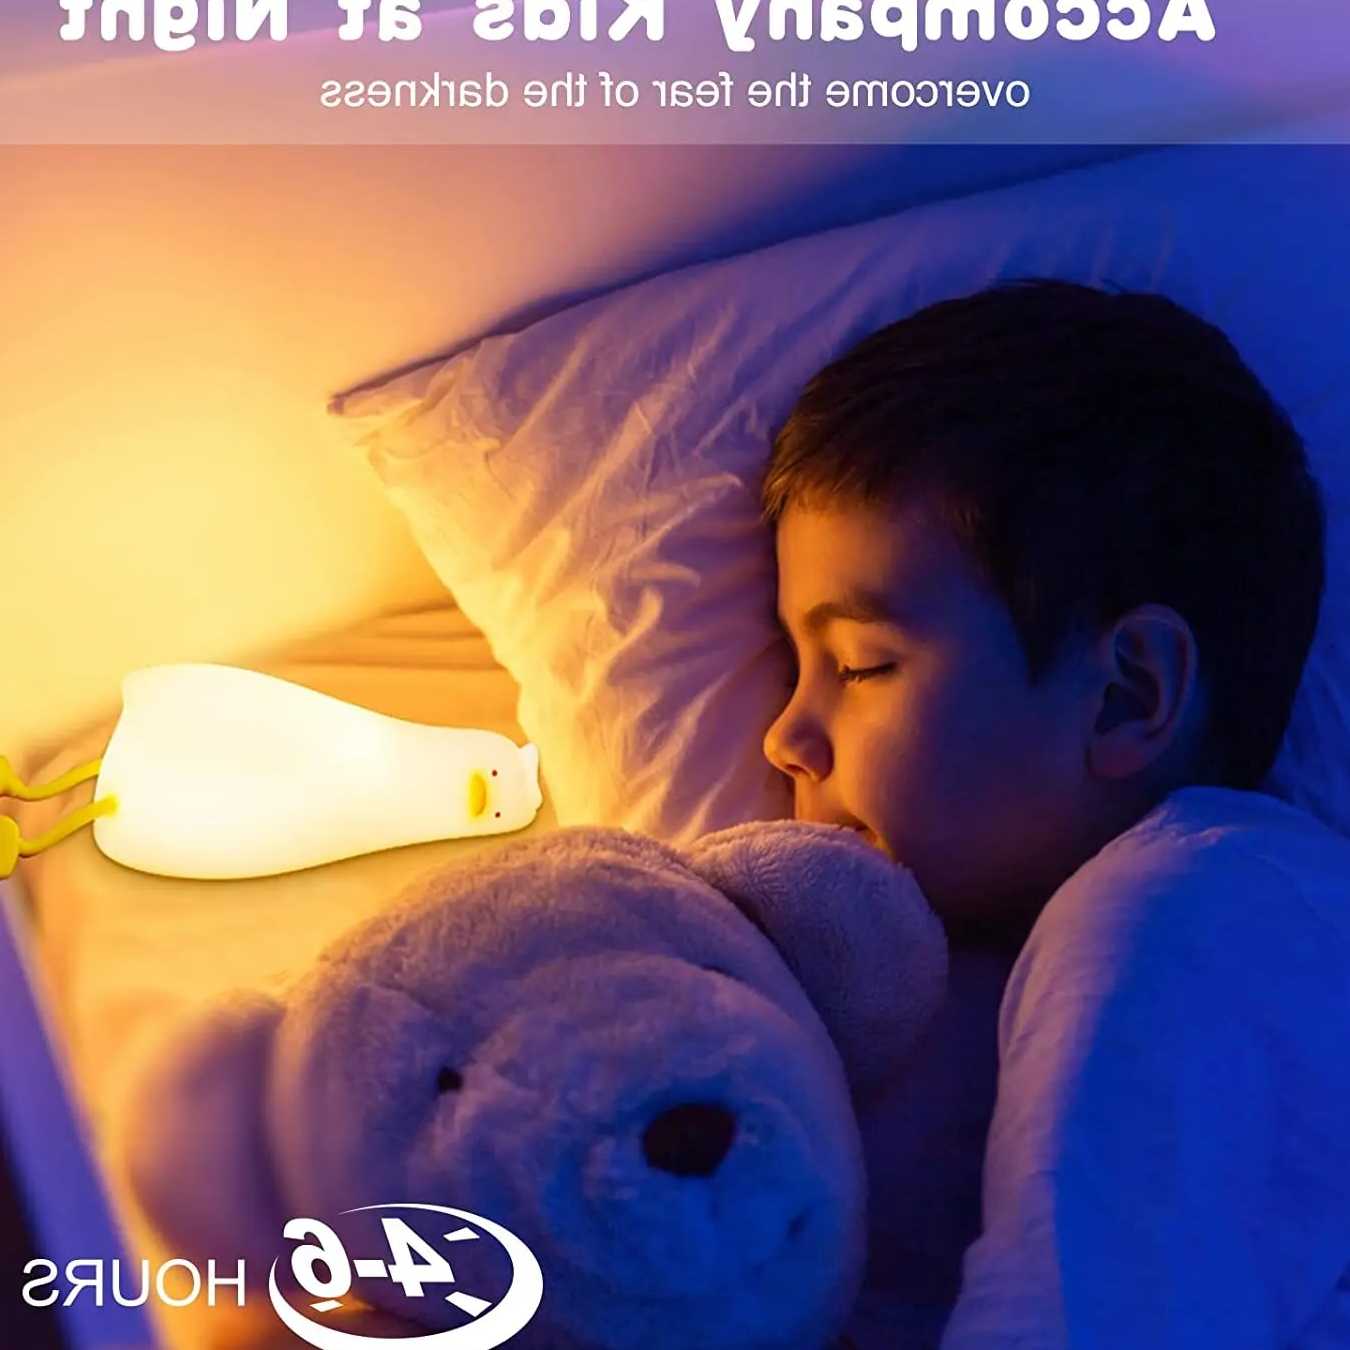 Opinie Cute Duck Led lampka nocna z USB akumulator Nightlights sili… sklep online